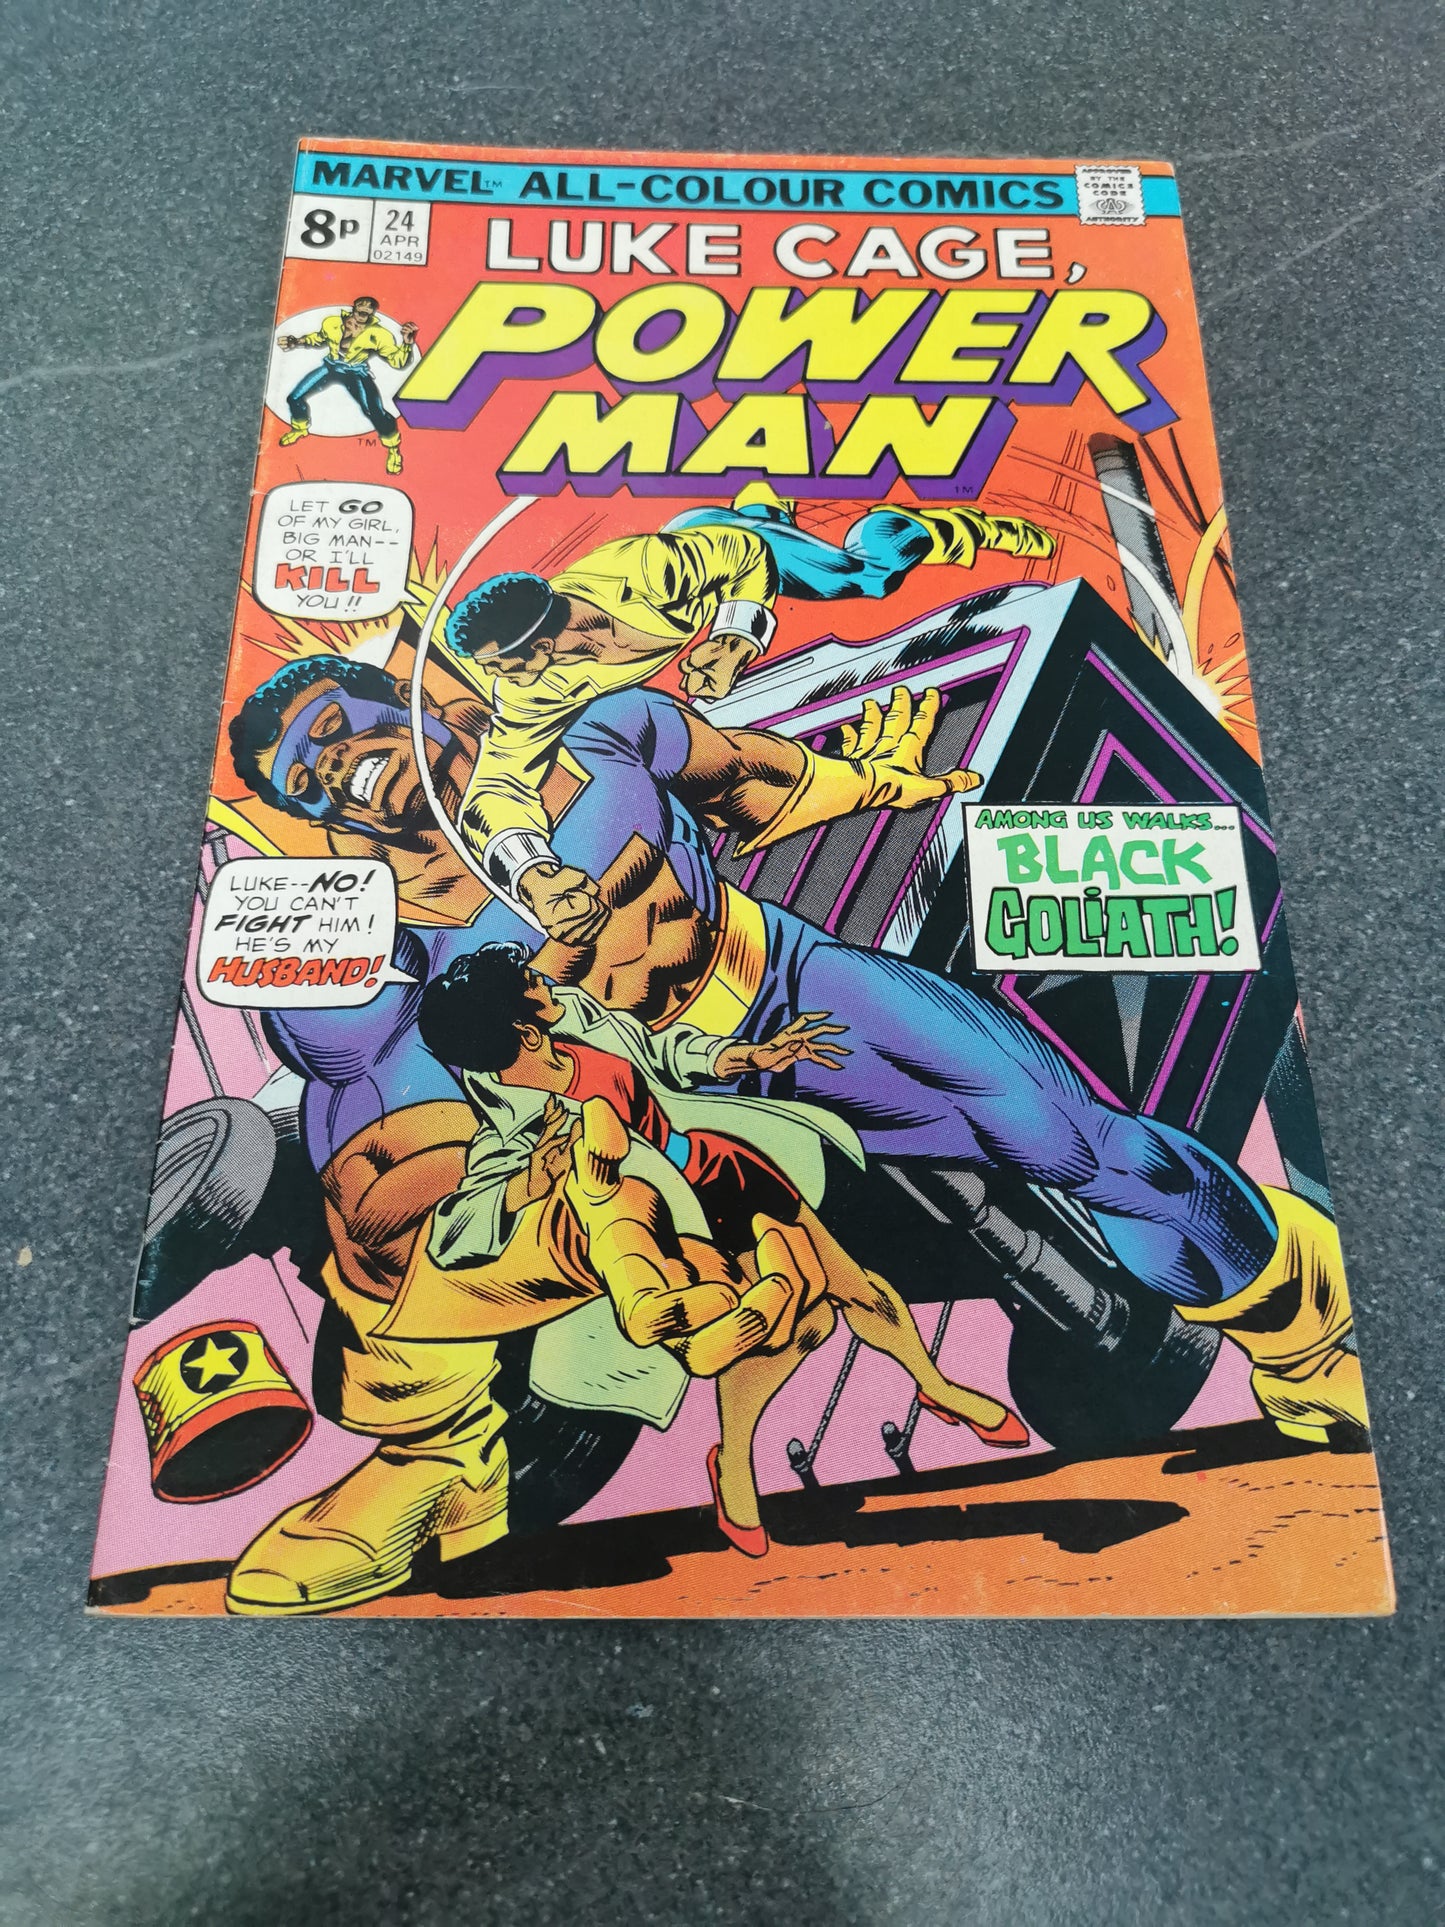 Power Man #24 1975 1st appearance of Black Goliath Marvel comic